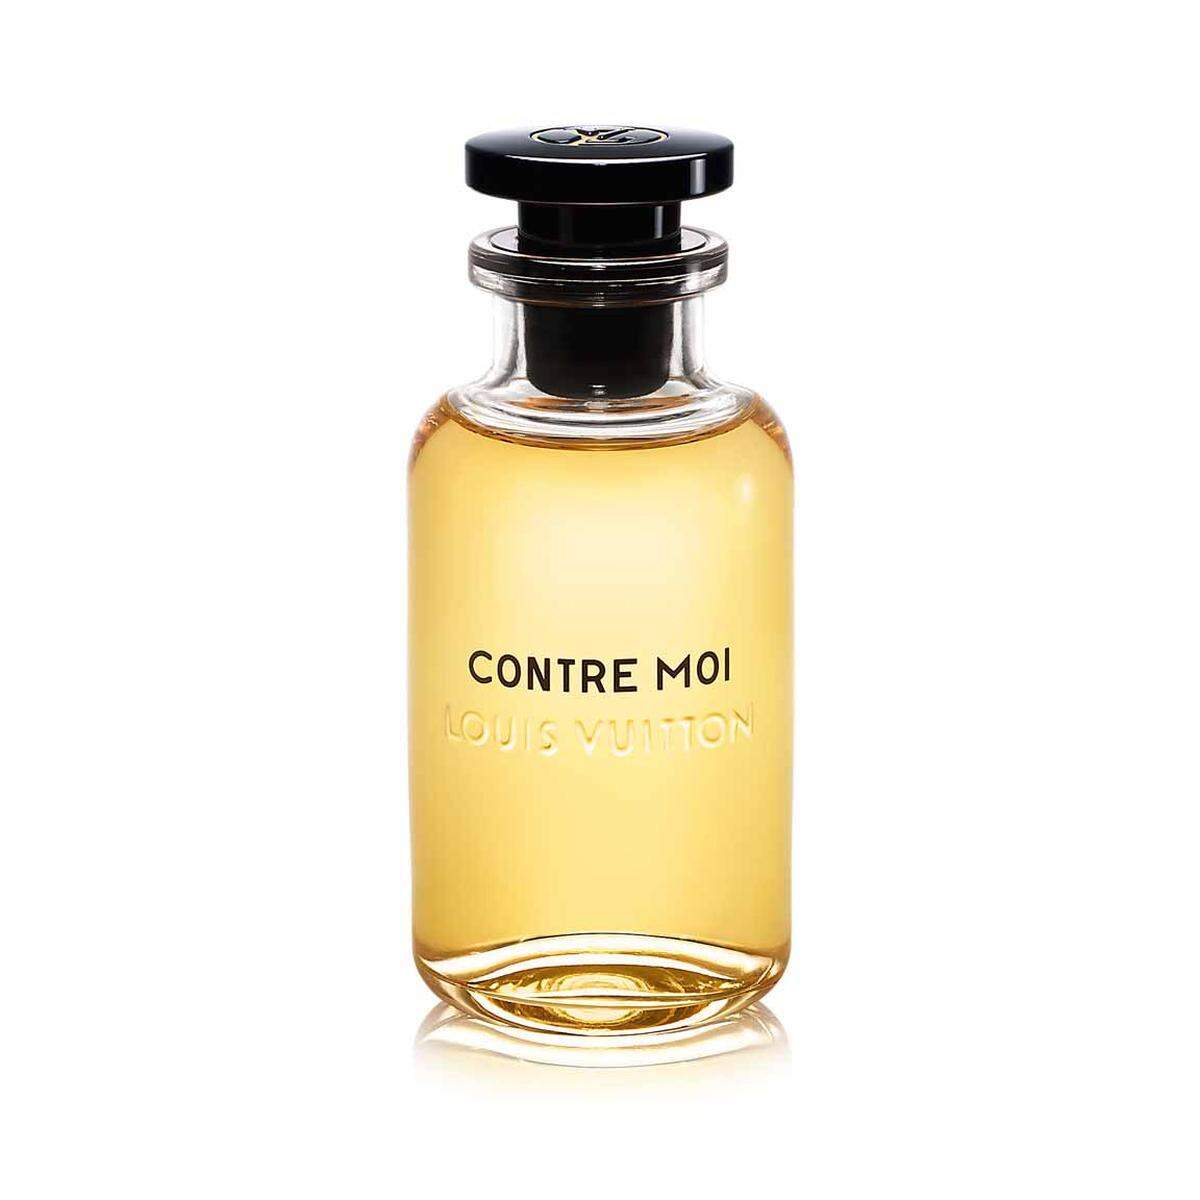 Der wärmste, vanillige Duft in der Louis-Vuitton-Kollektion ist "Contre Moi" 100 ml Eau de Parfum um 200 Euro. 